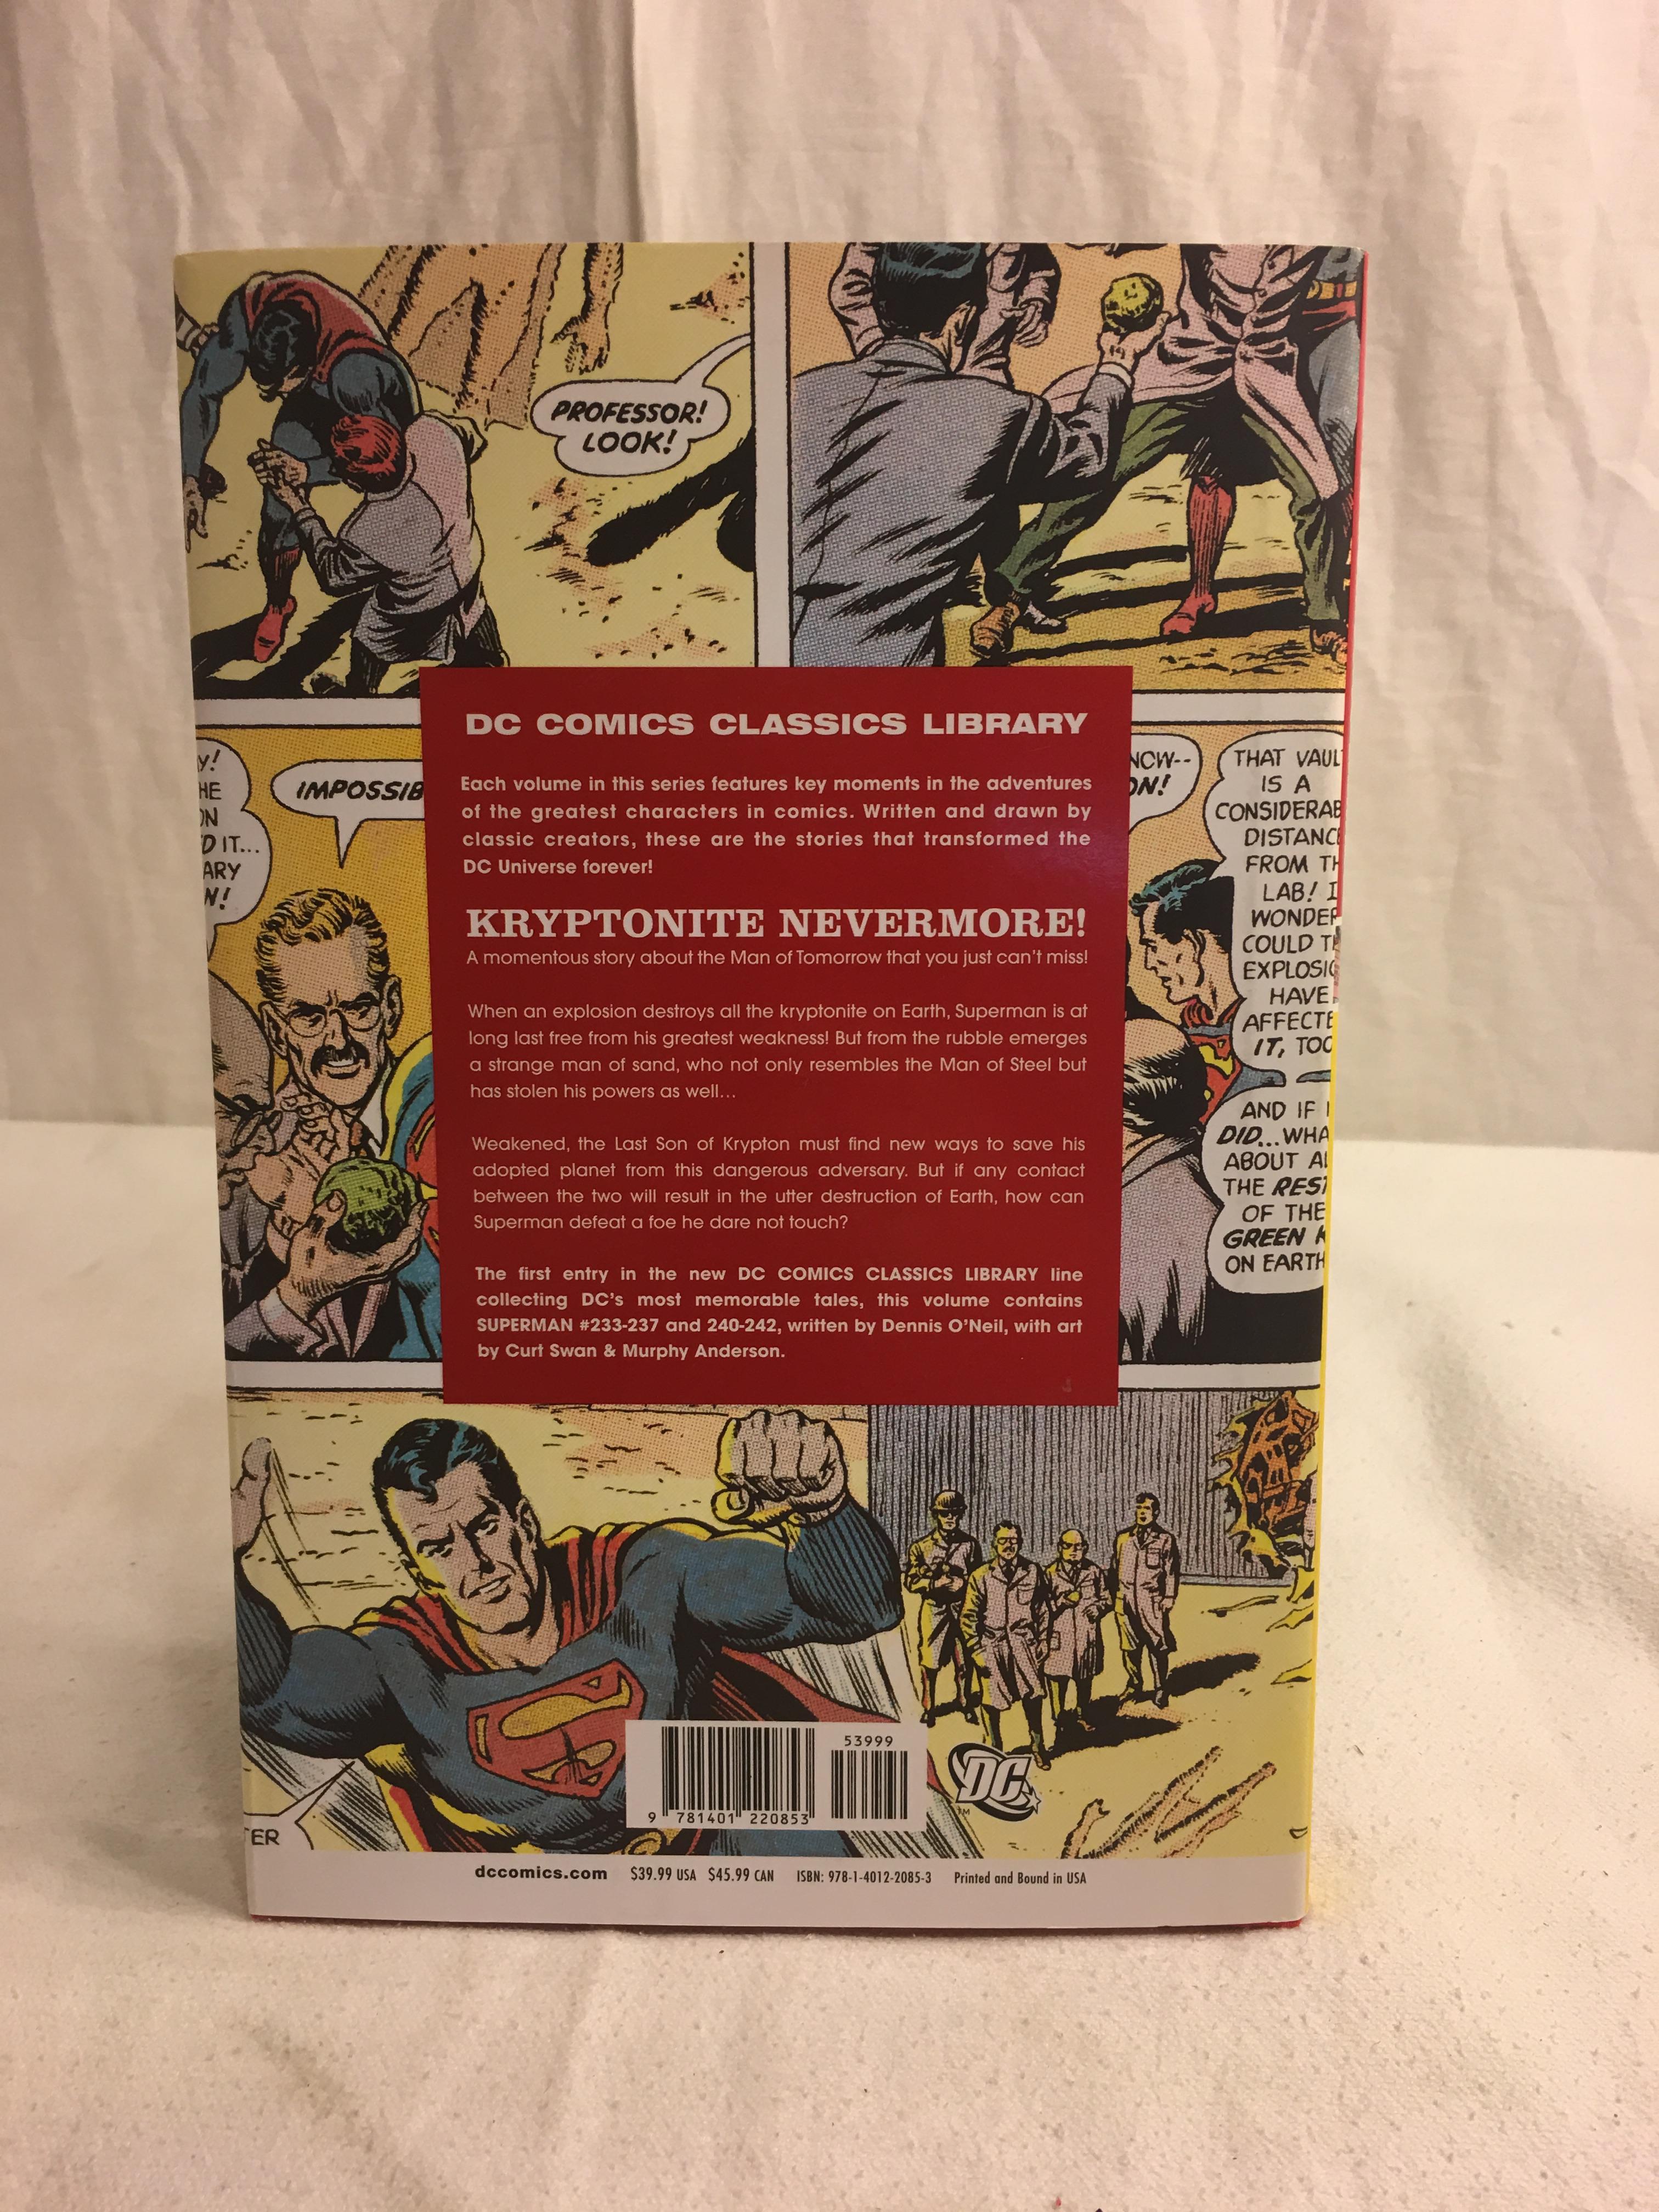 Collector DC, Comic Classic Library Superman Kryptonite Nevermore Book